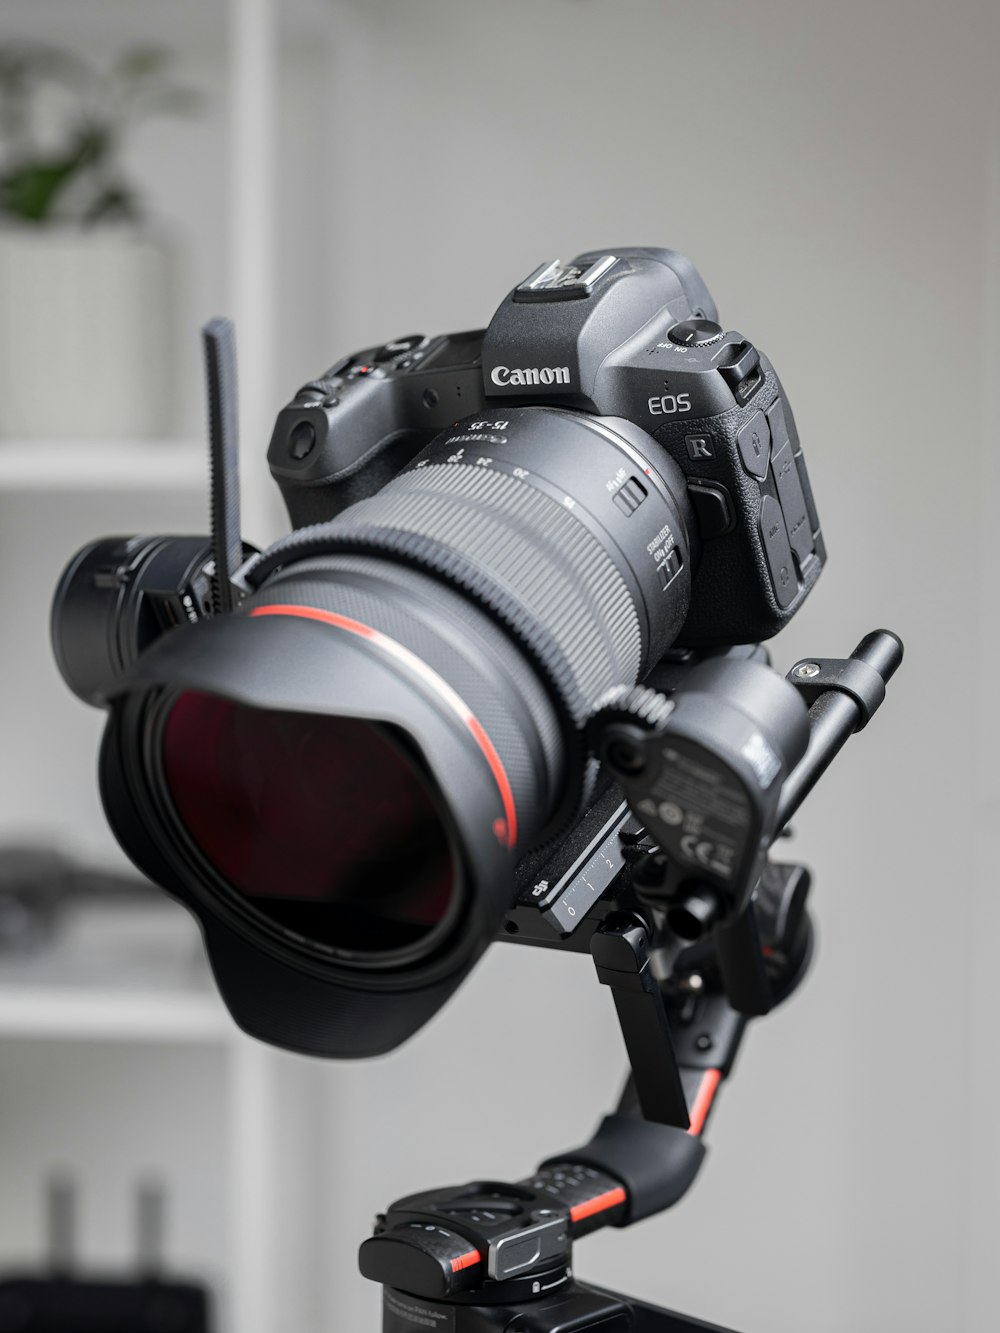 Fotocamera reflex digitale Nikon nera su treppiede nero